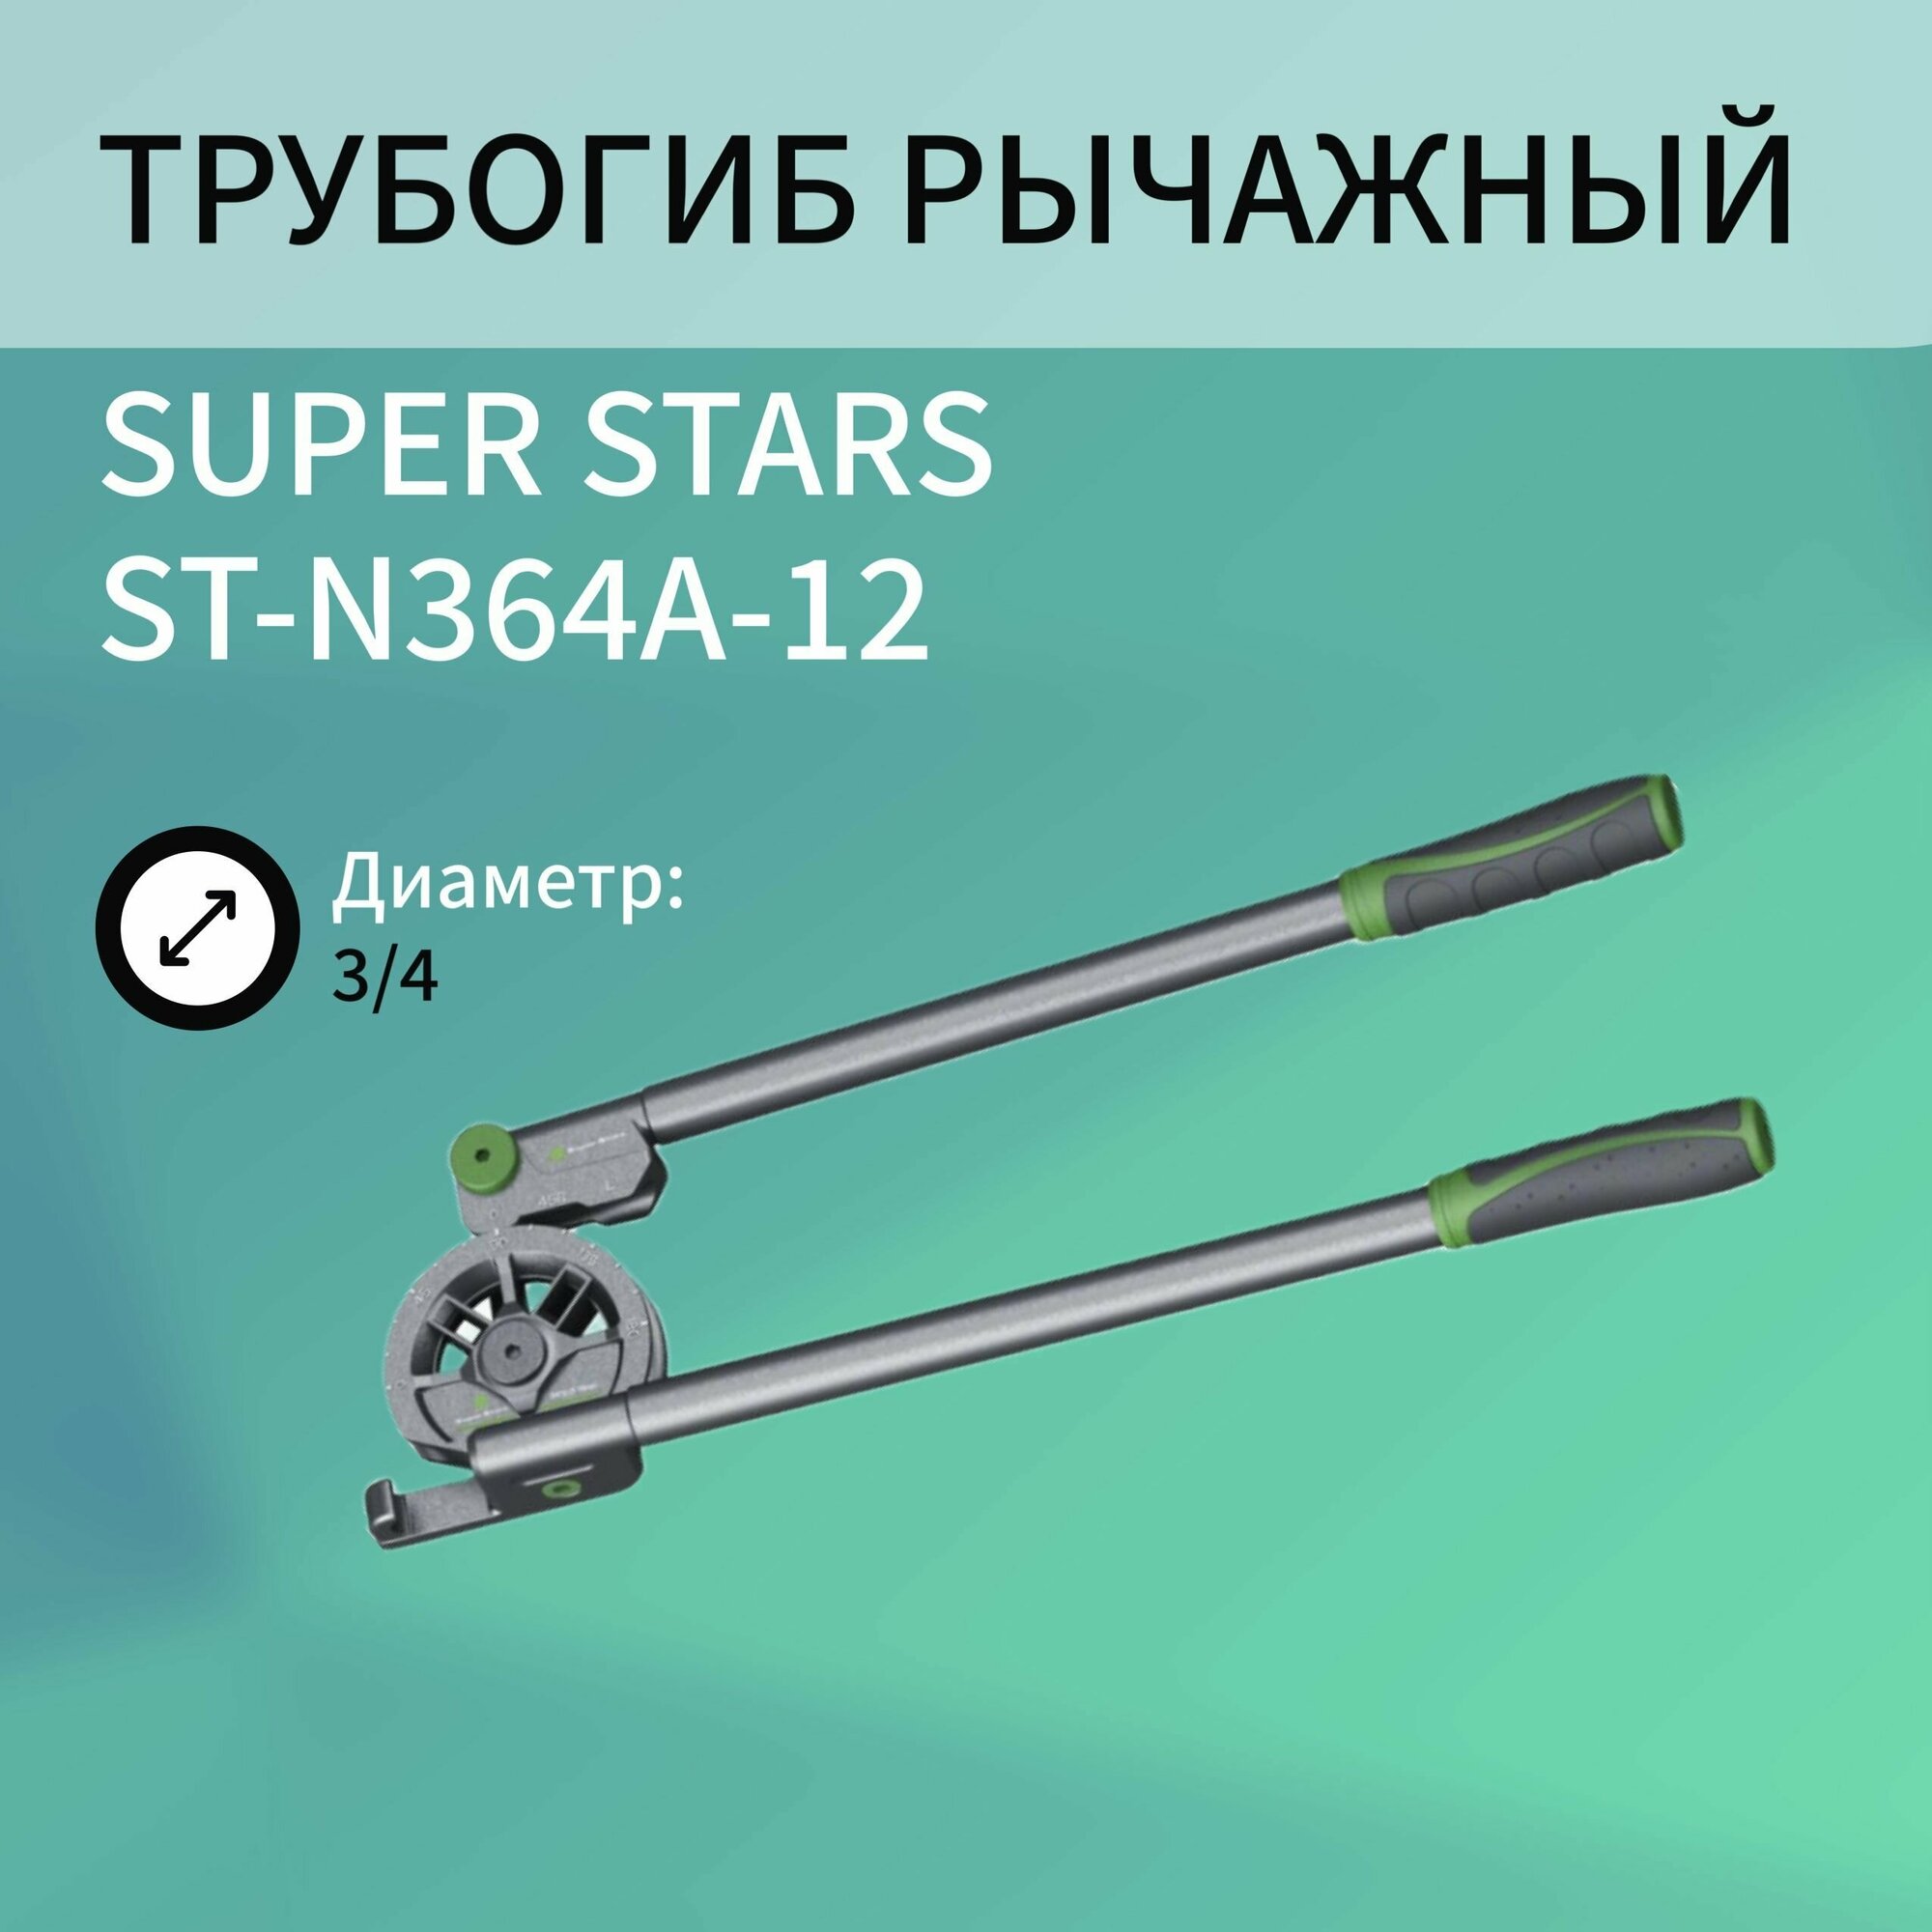 Трубогиб рычажный SUPER STARS ST-N364A-12, диаметр 3/4"